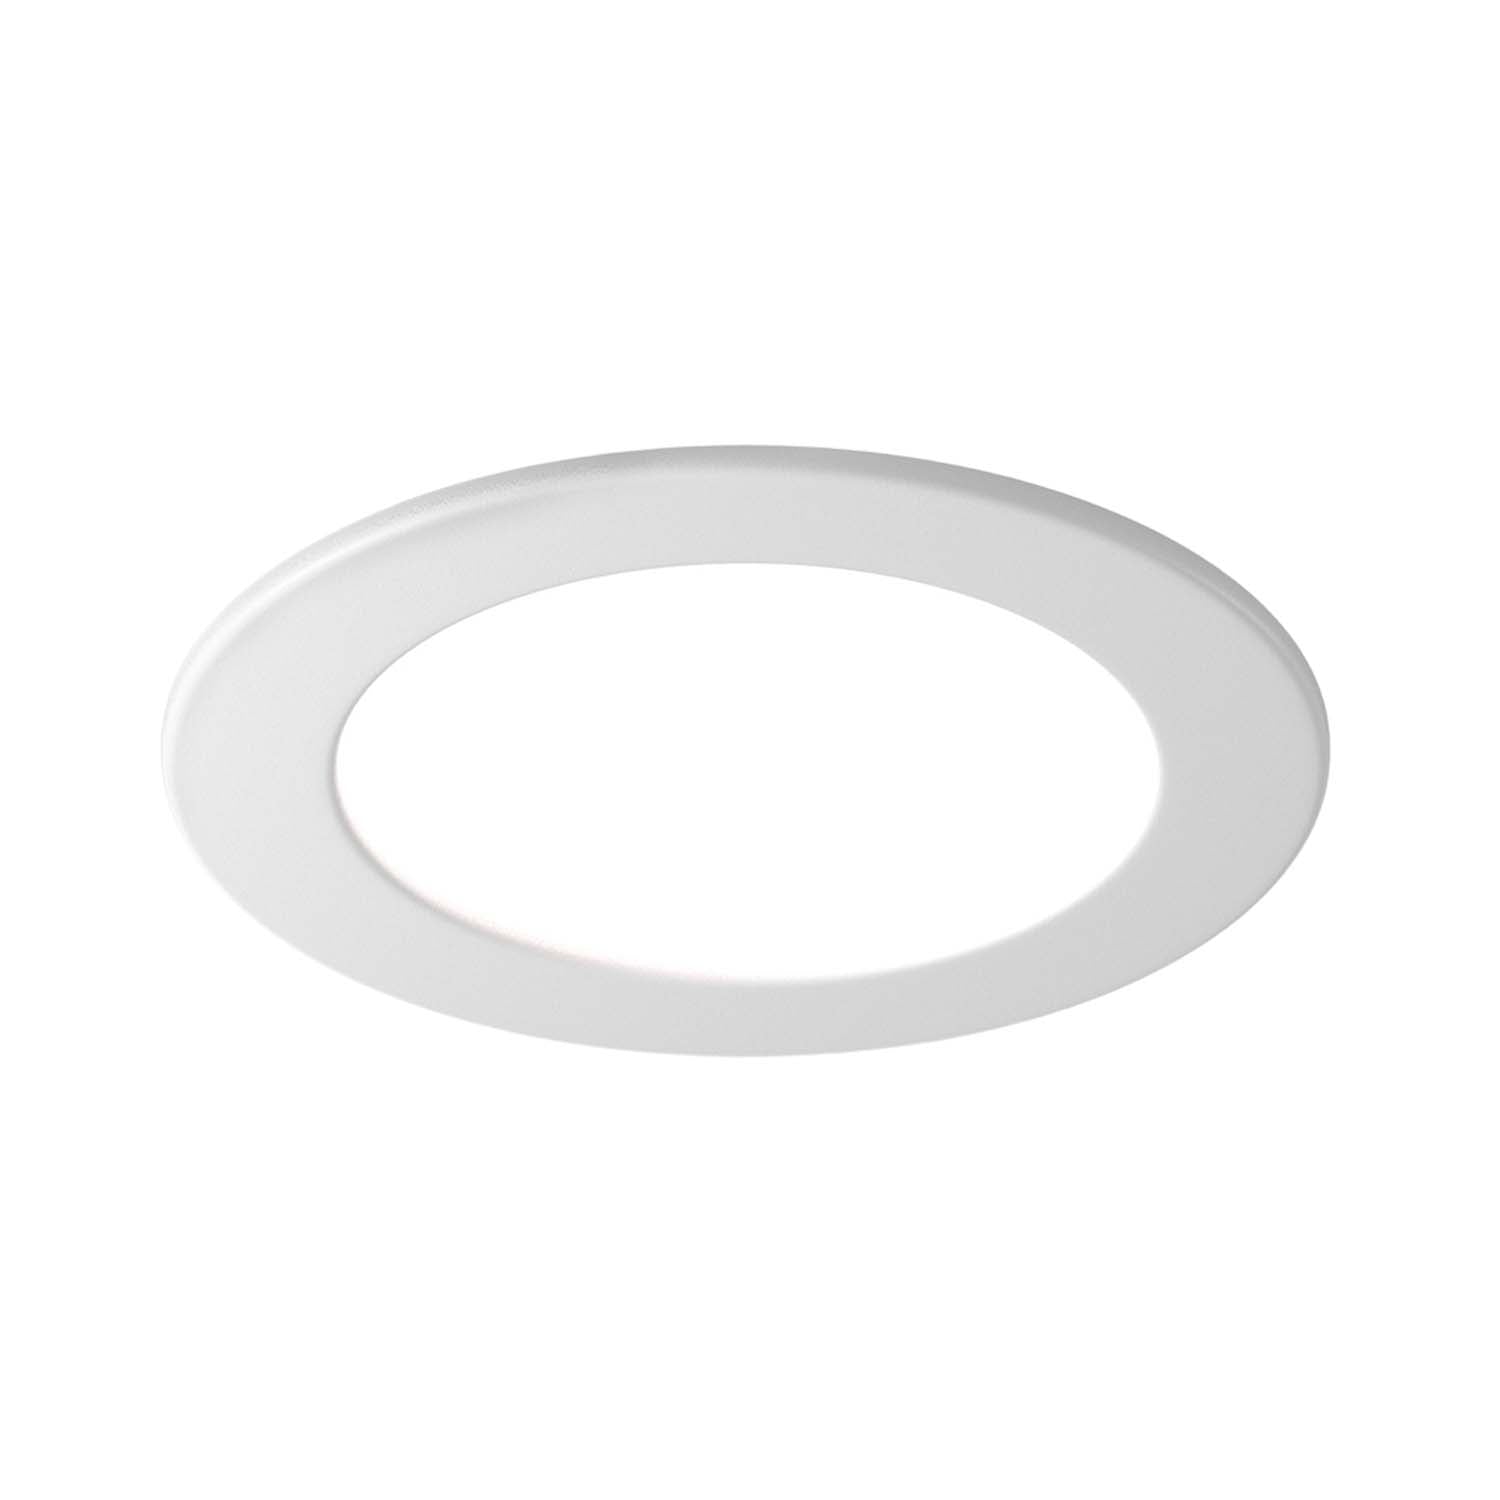 STOCKTON - White round recessed spotlight, diameter 75mm